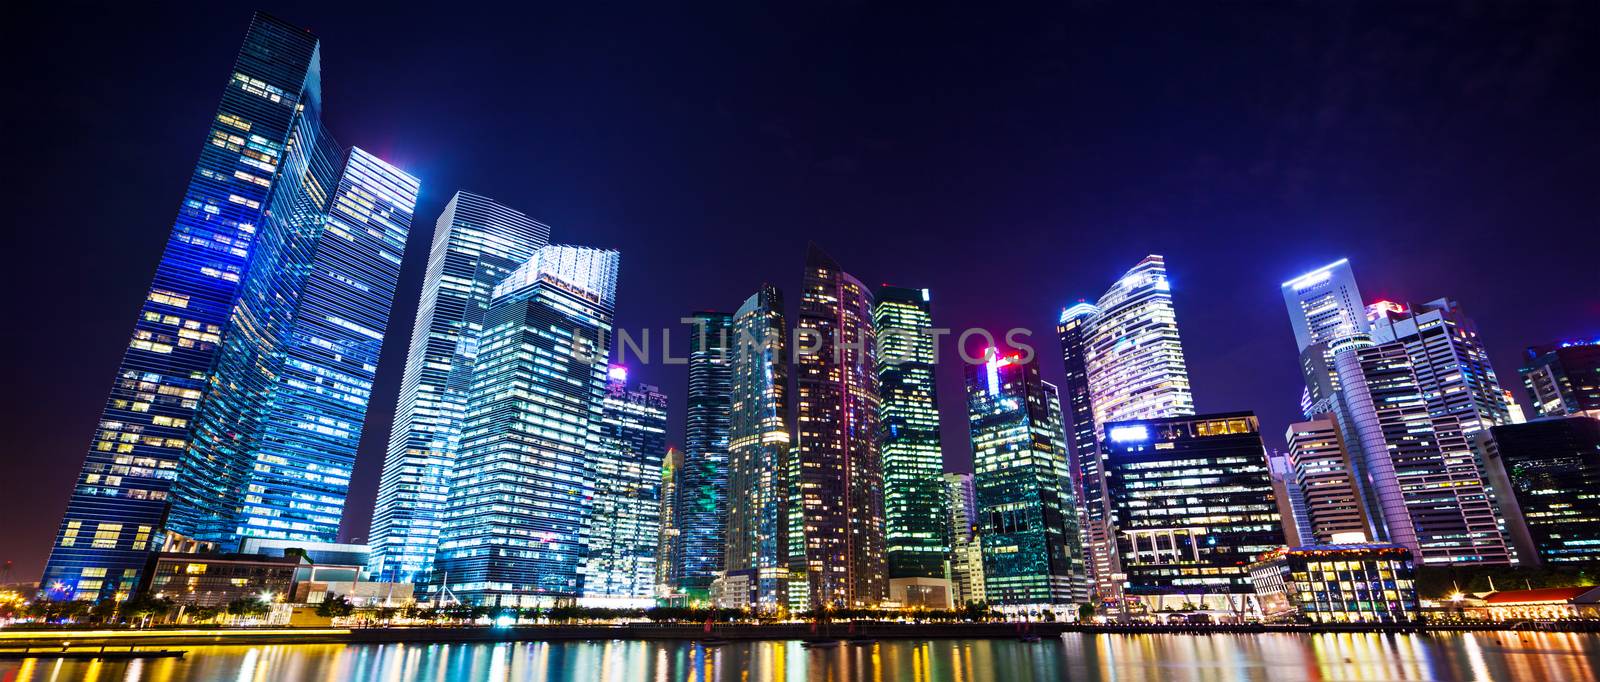 Cityscape Singapore at night by leungchopan